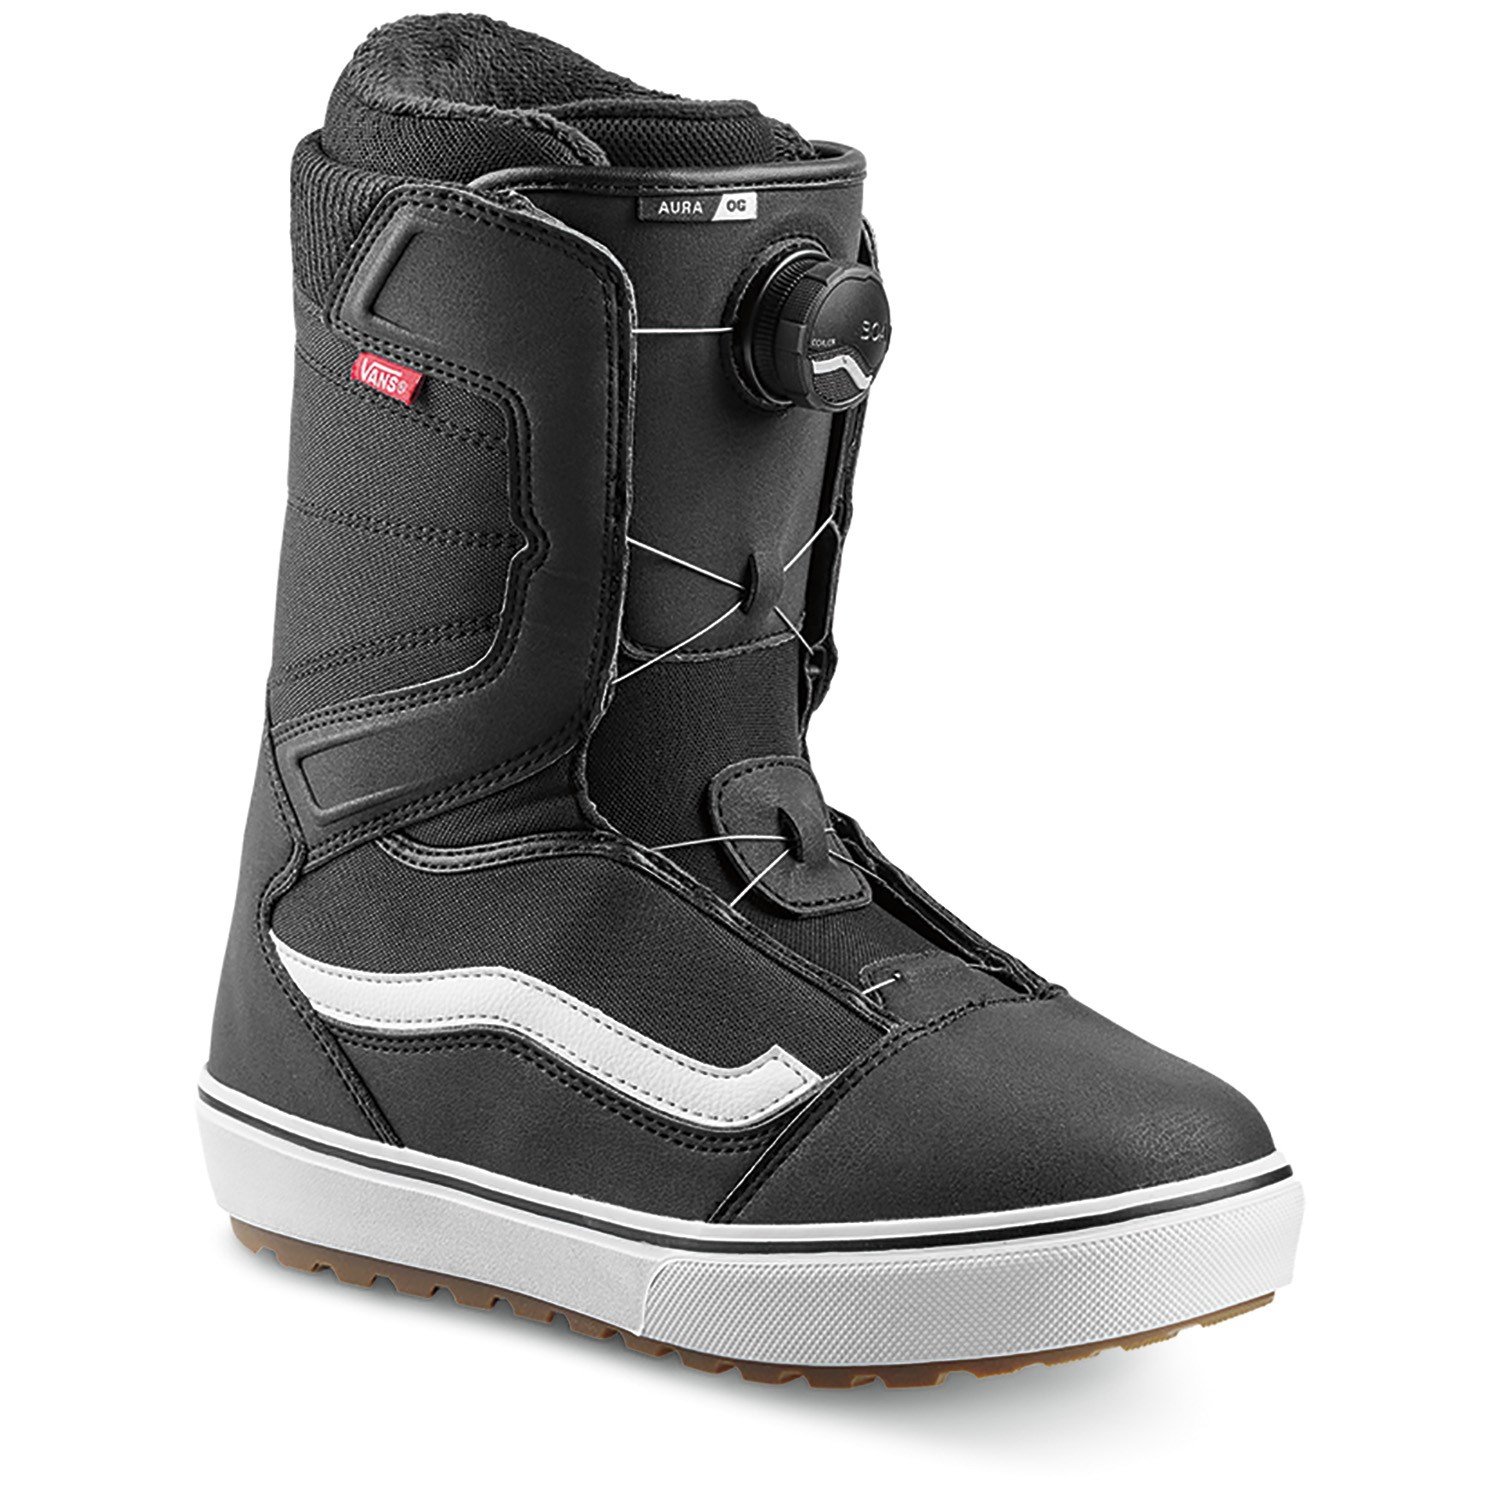 vans snowboard boots size 12 cheap online